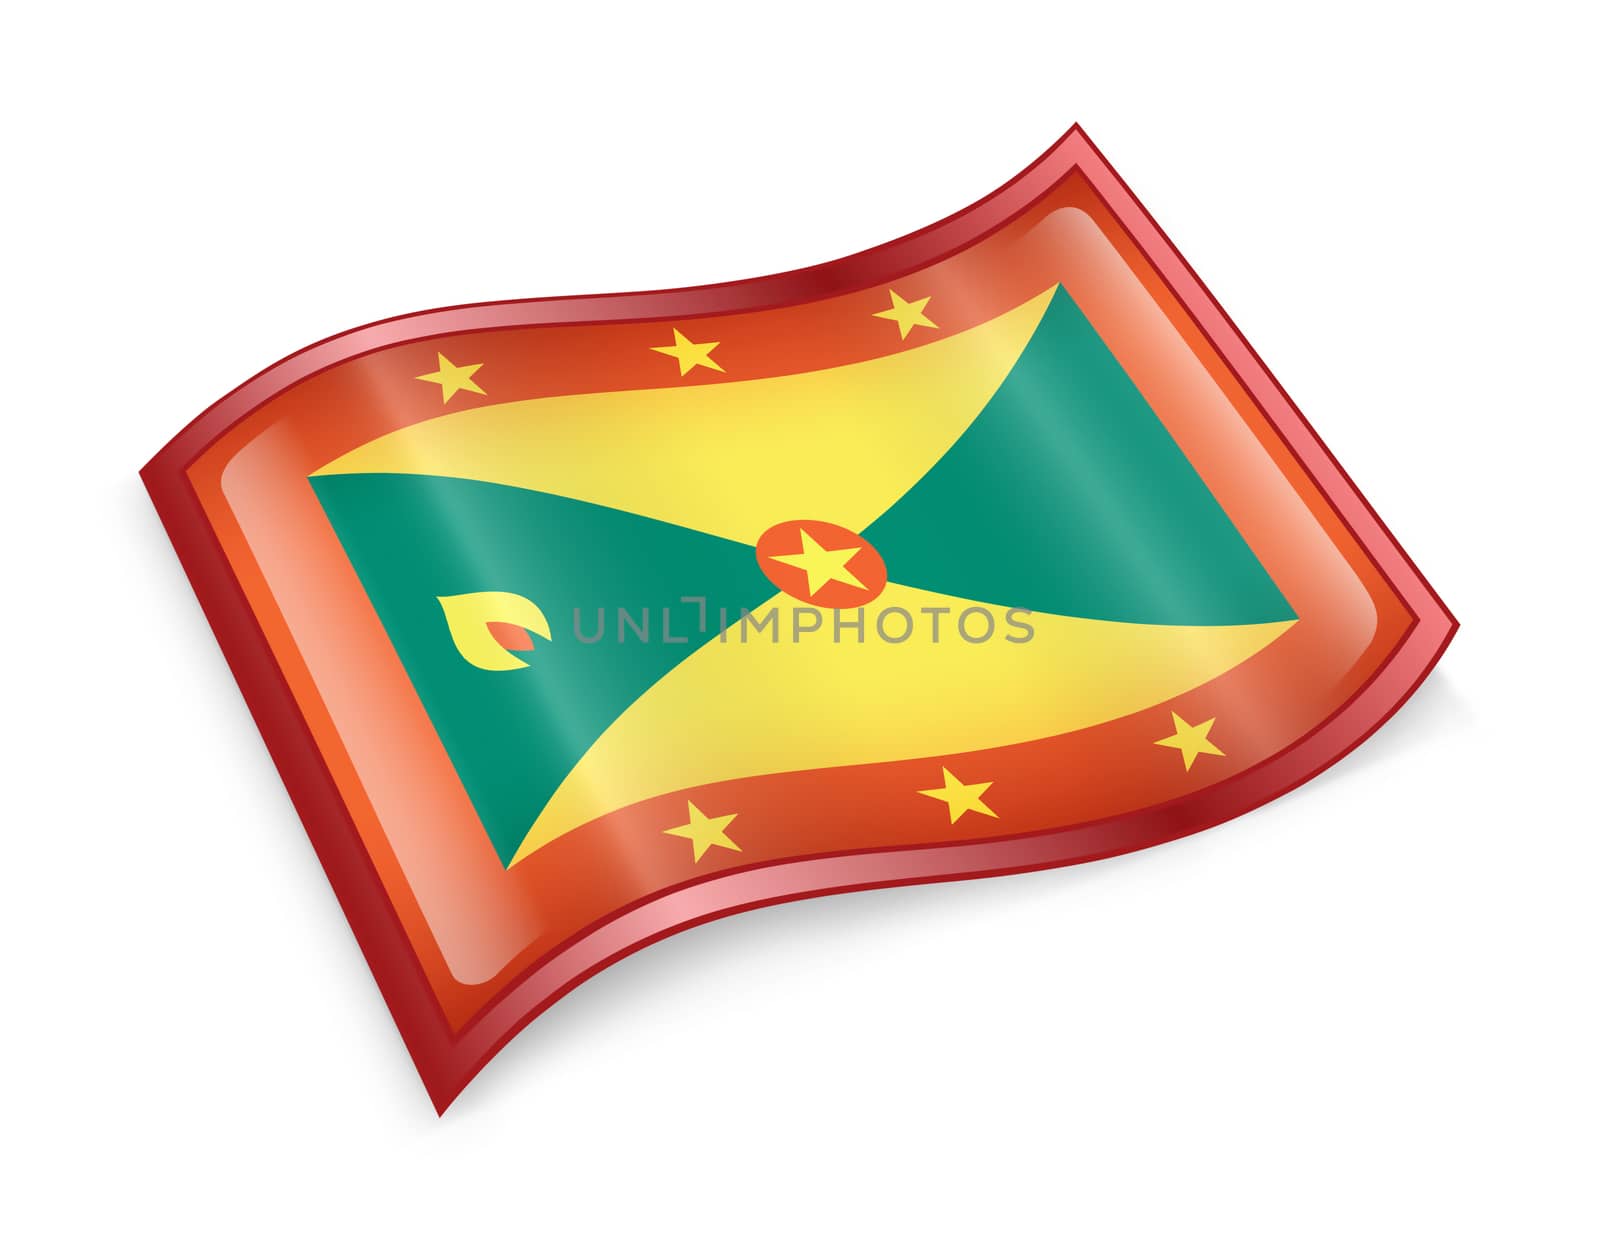 Grenada flag icon, isolated on white background